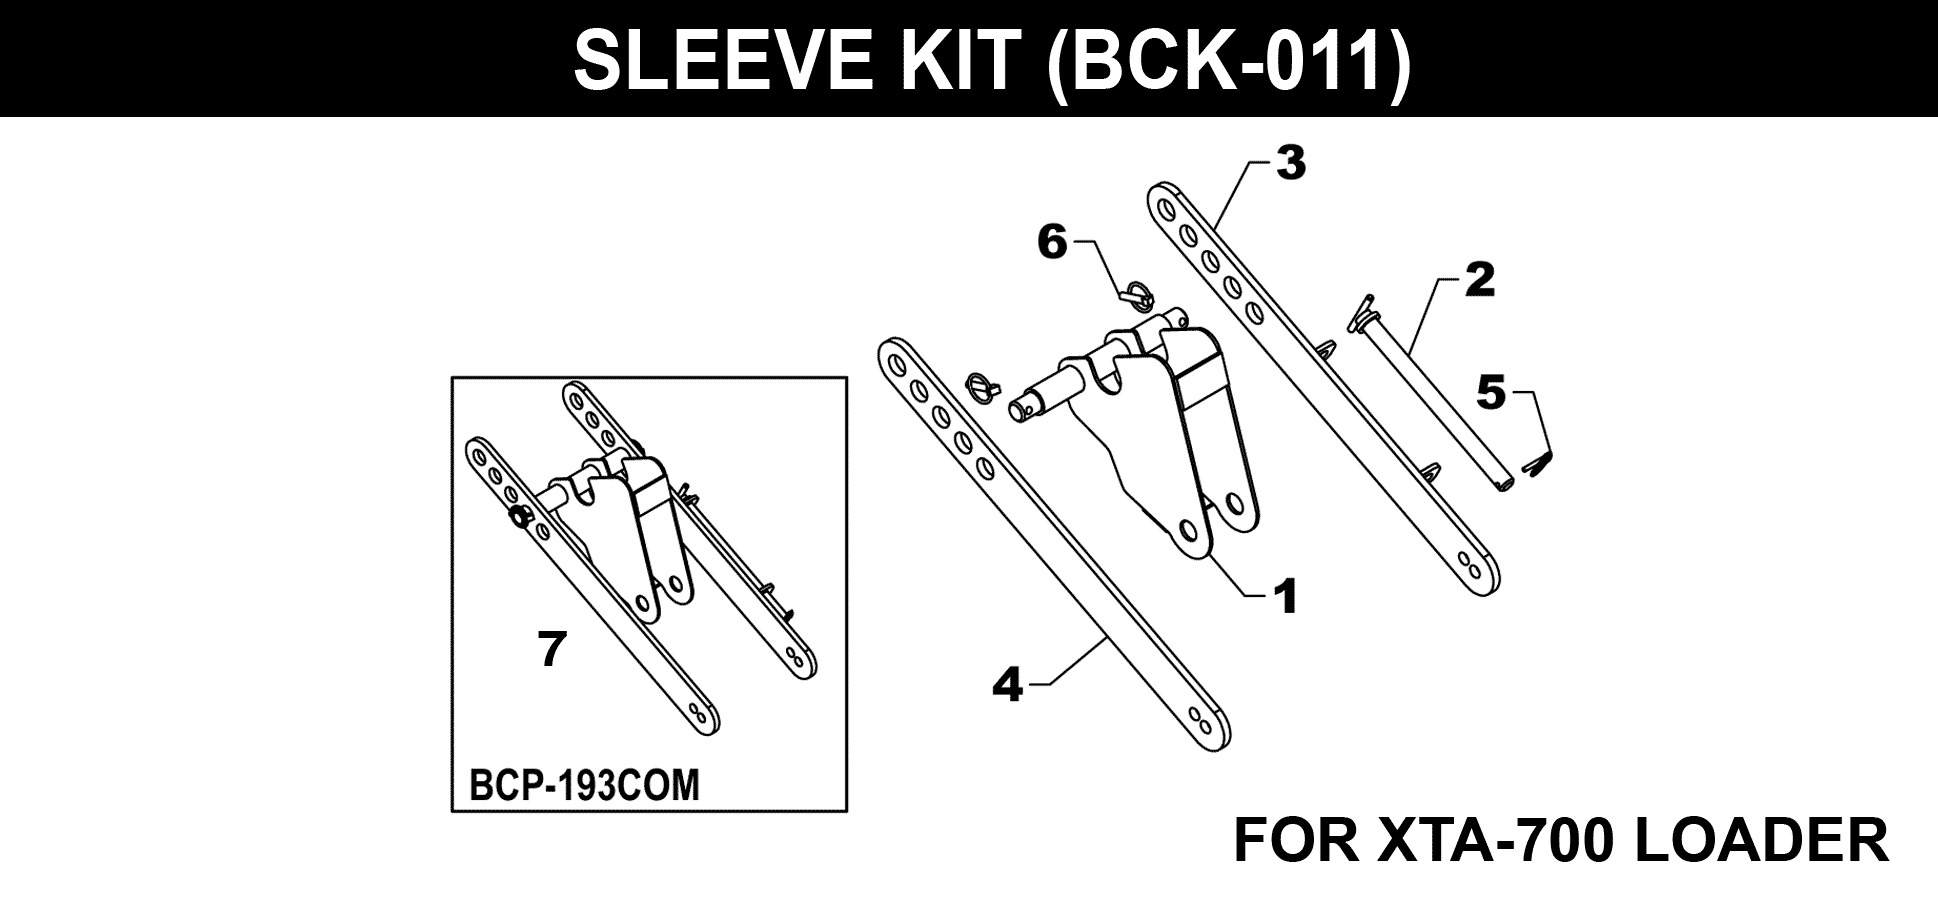 BCK-011 Sleeve Kit